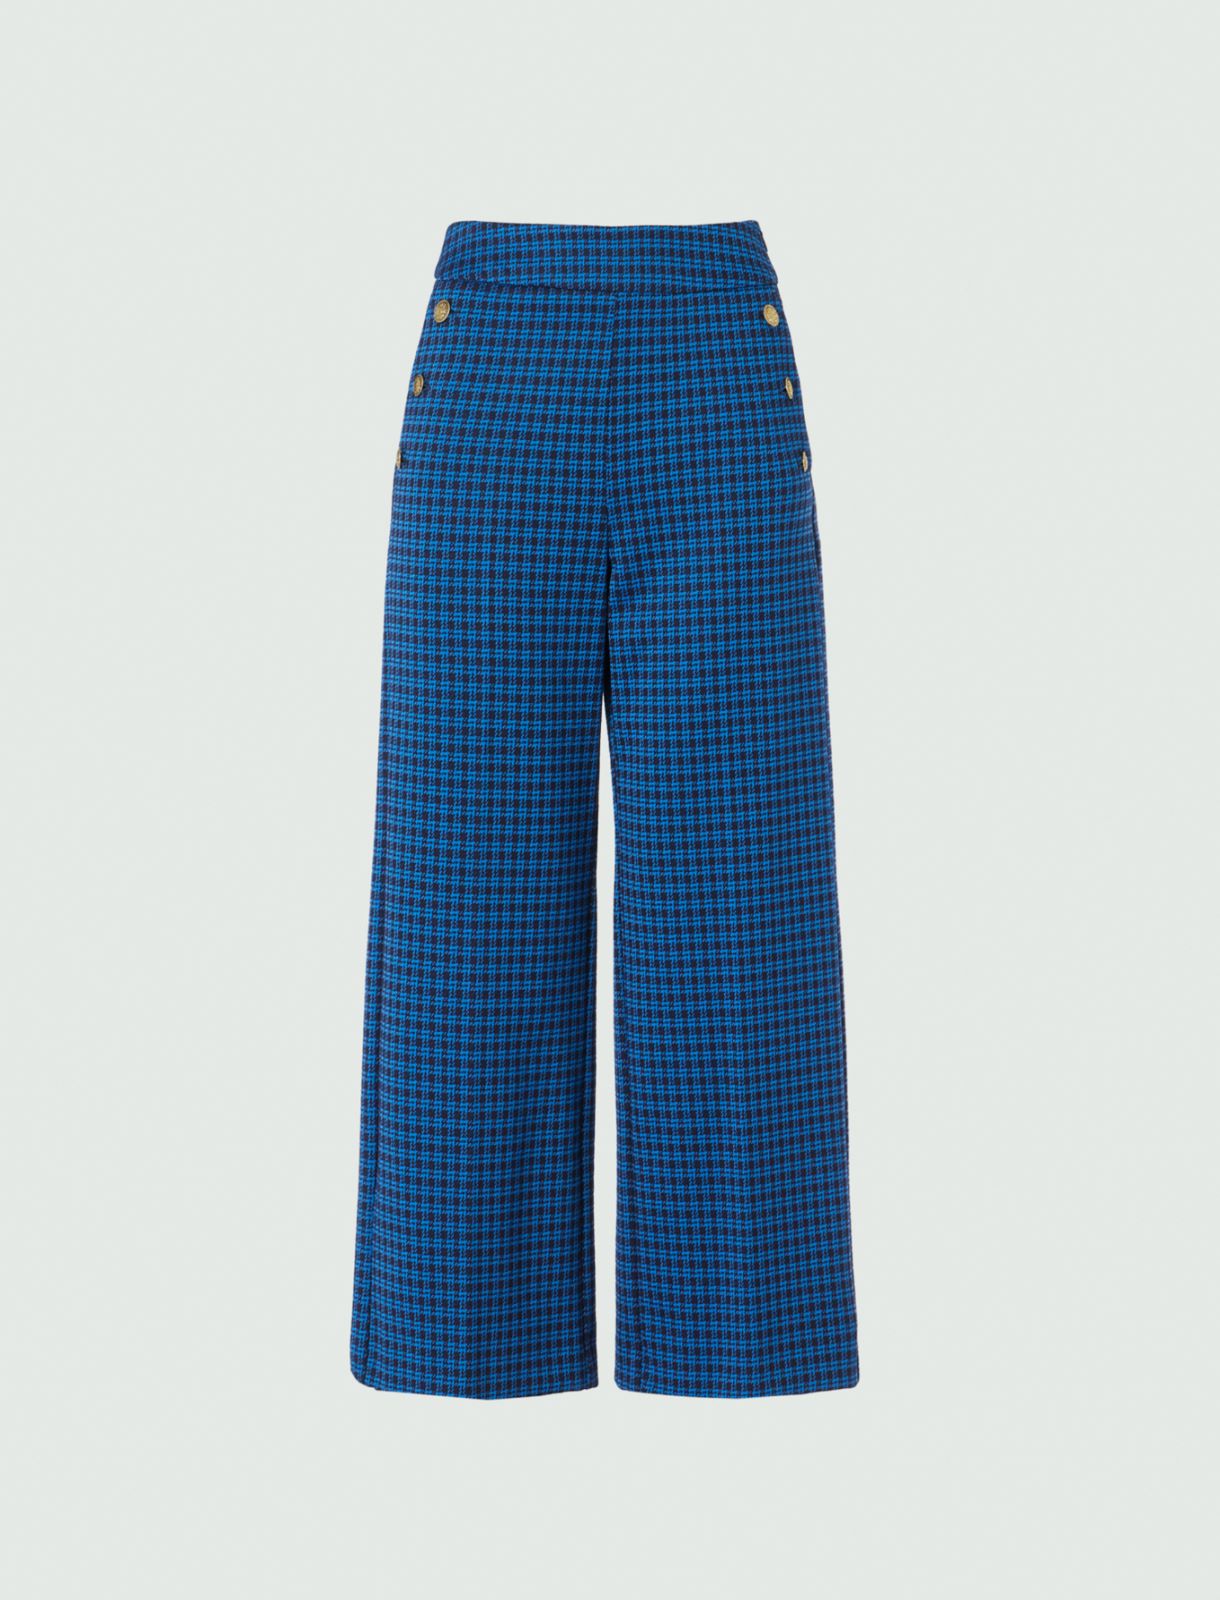 Pantalon en jersey - Bleuet - Marella - 2